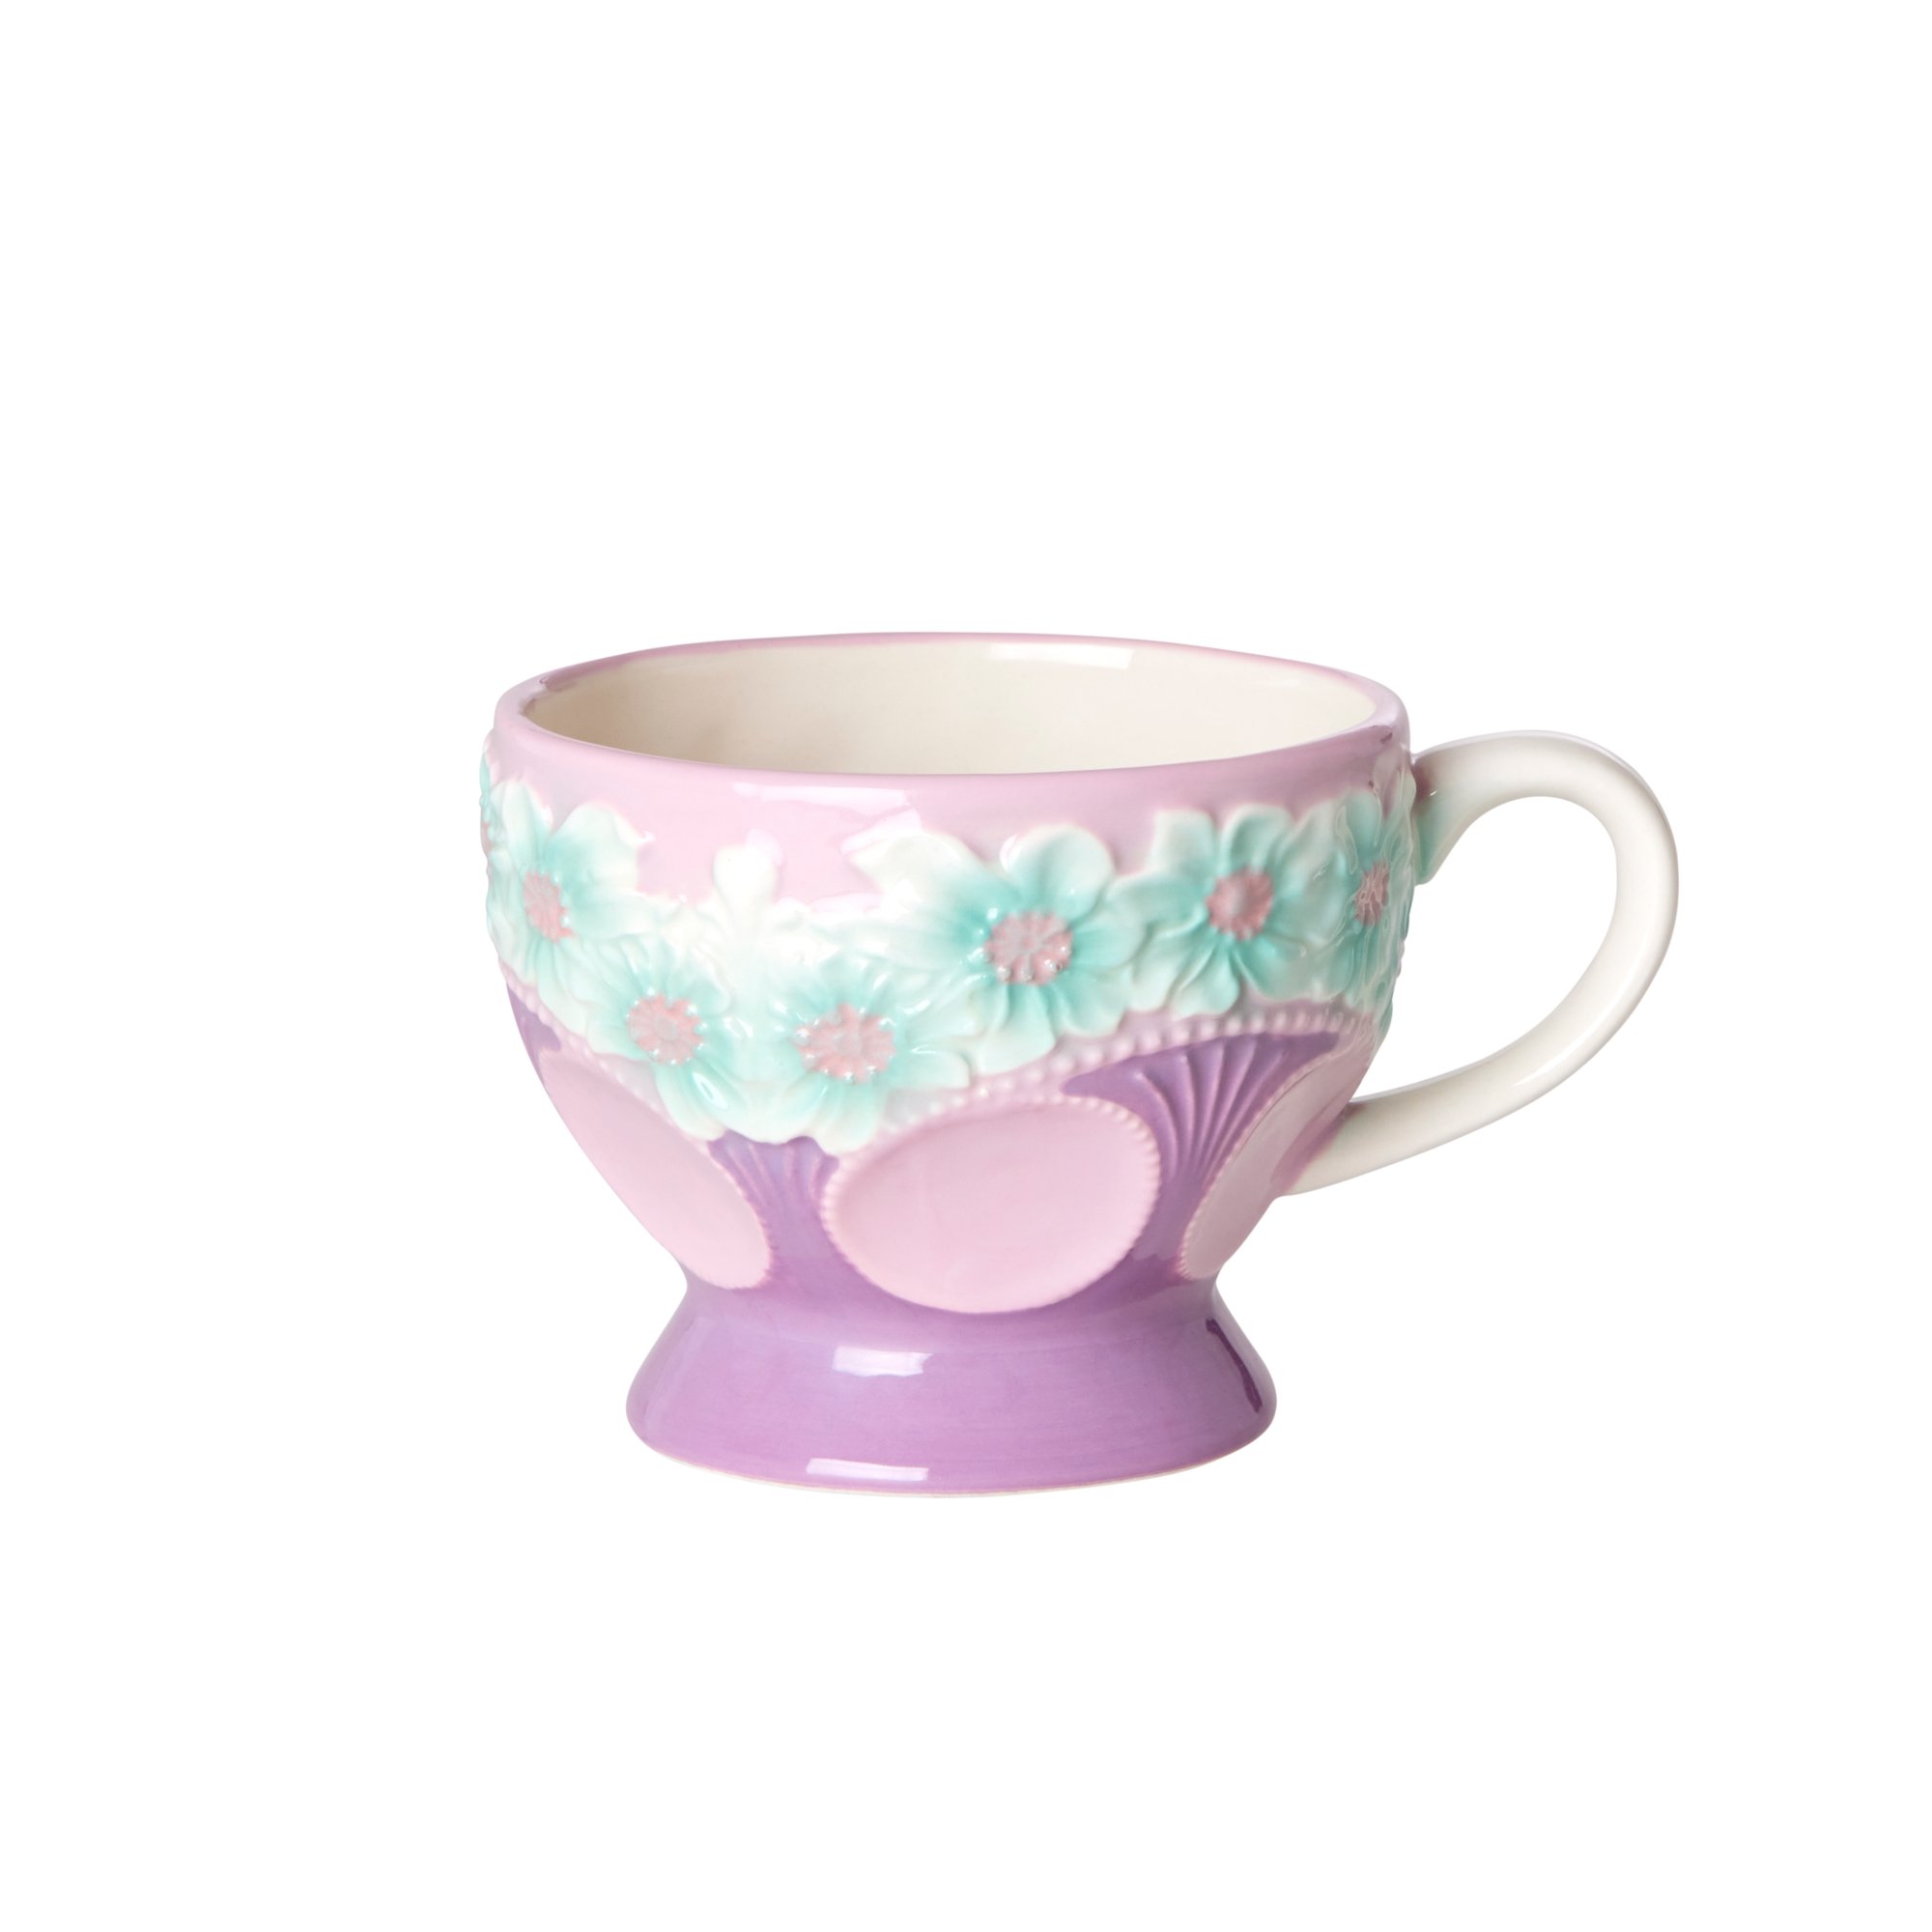 Rice - Ceramic Mug with Embossed Flower Design - Lavender